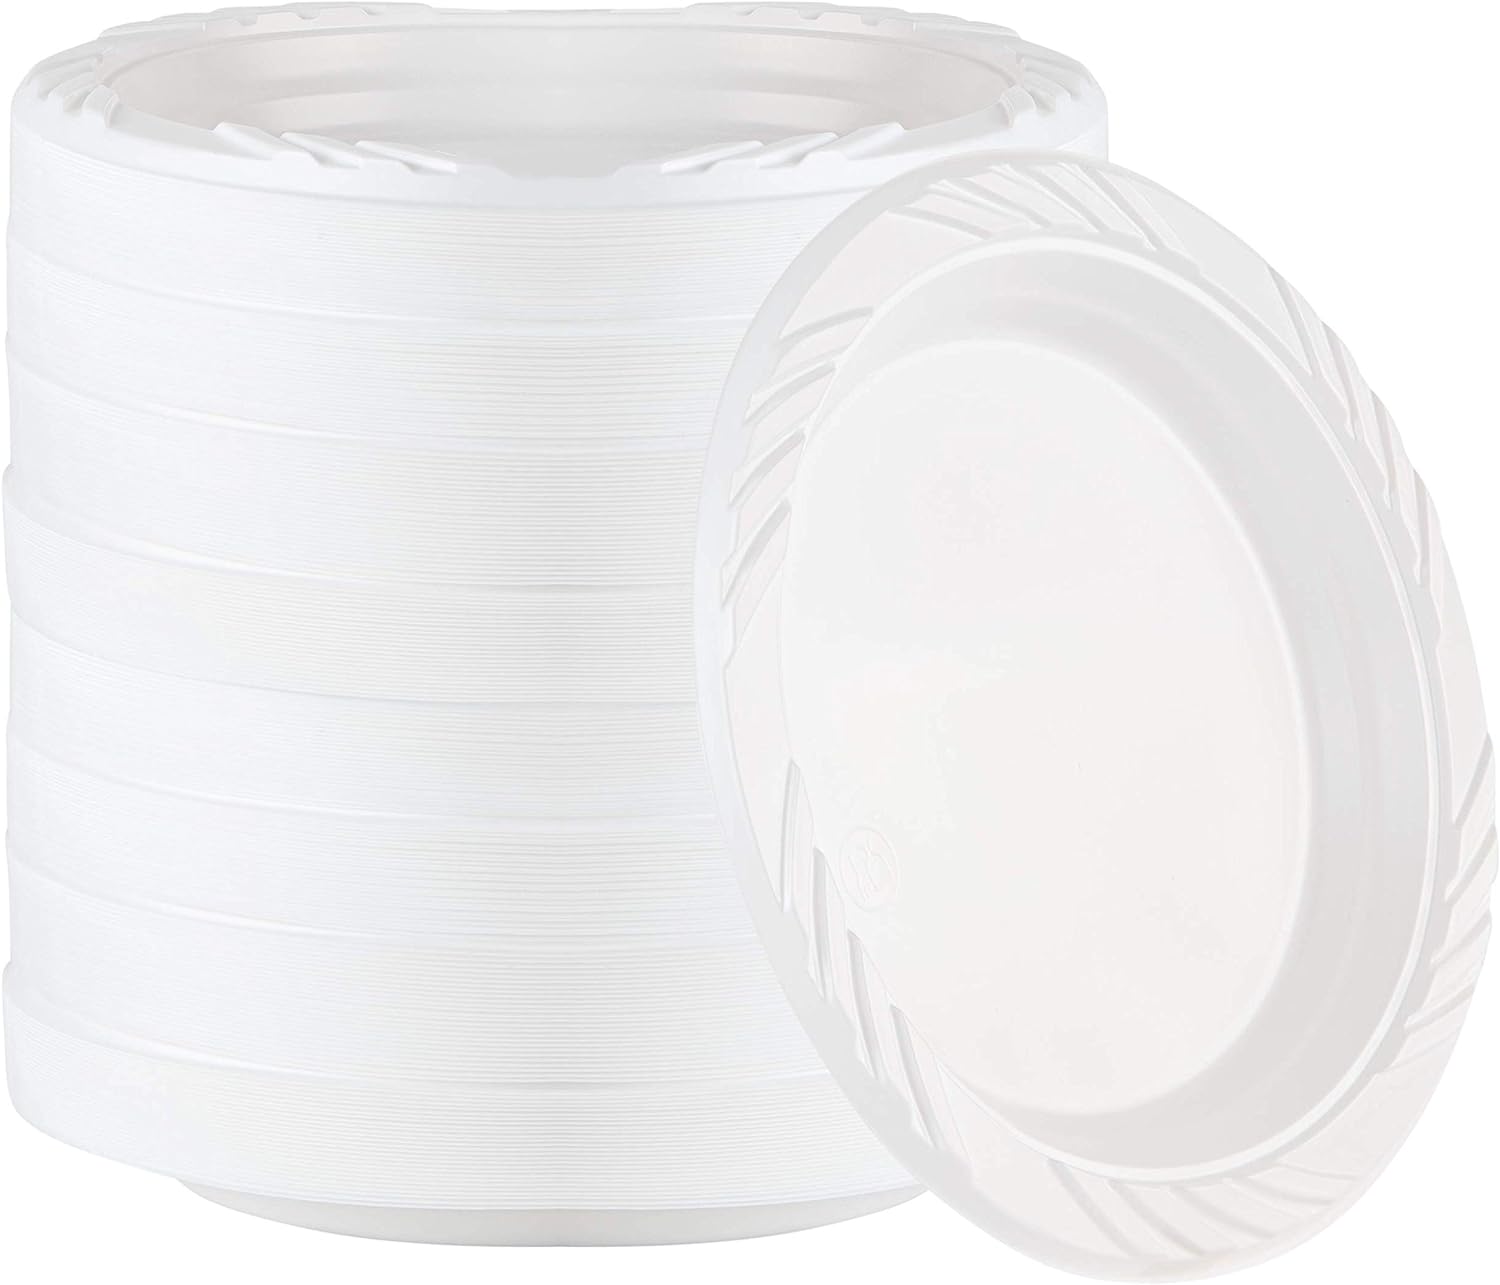 PLASTICPRO 200 Count Disposable 6 Inch White Plastic Dessert Plates